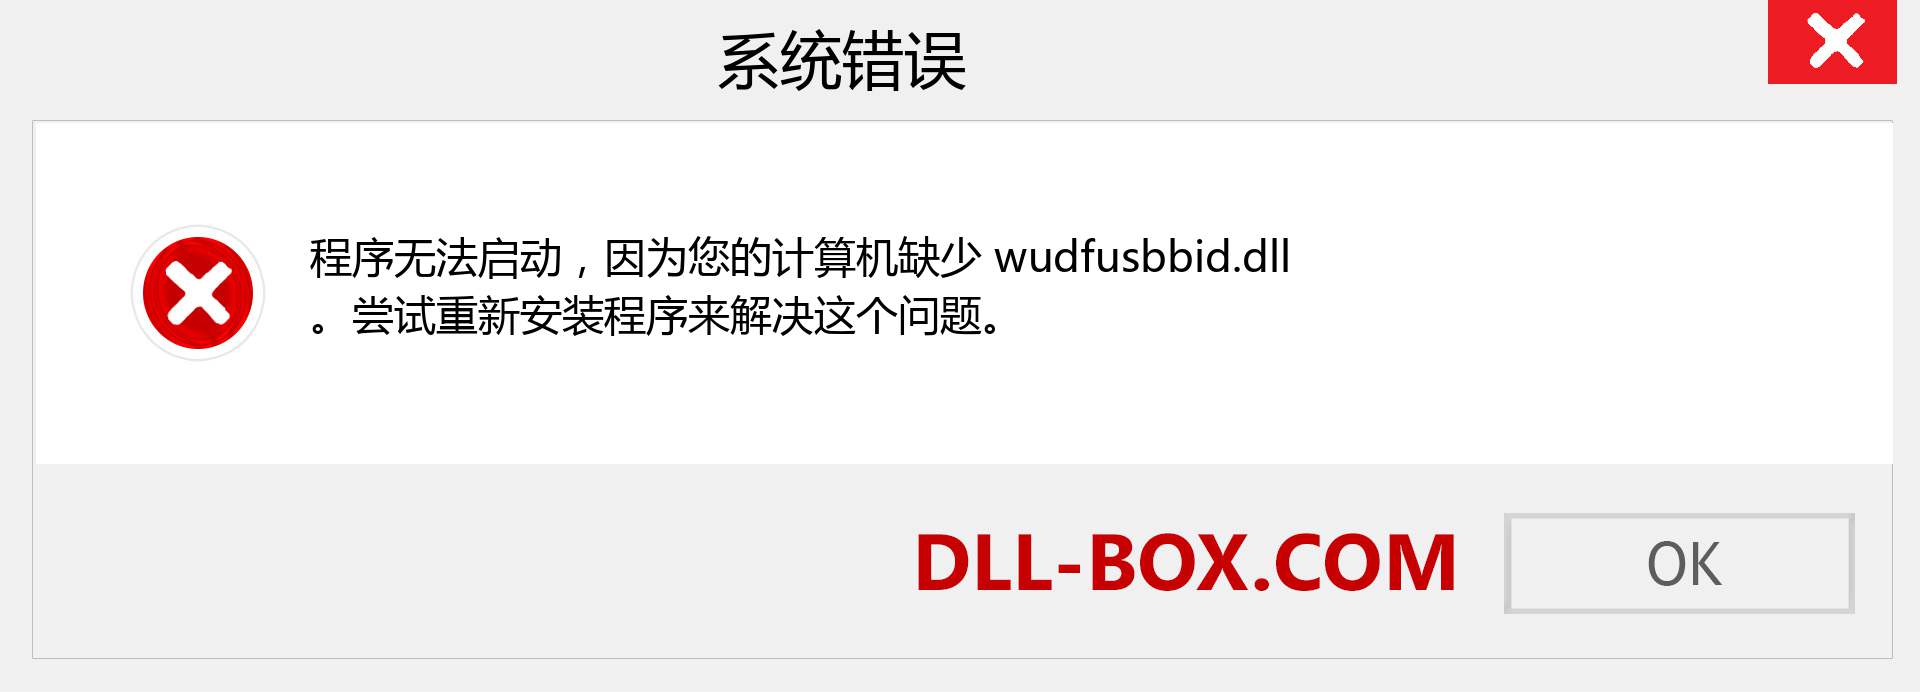 wudfusbbid.dll 文件丢失？。 适用于 Windows 7、8、10 的下载 - 修复 Windows、照片、图像上的 wudfusbbid dll 丢失错误